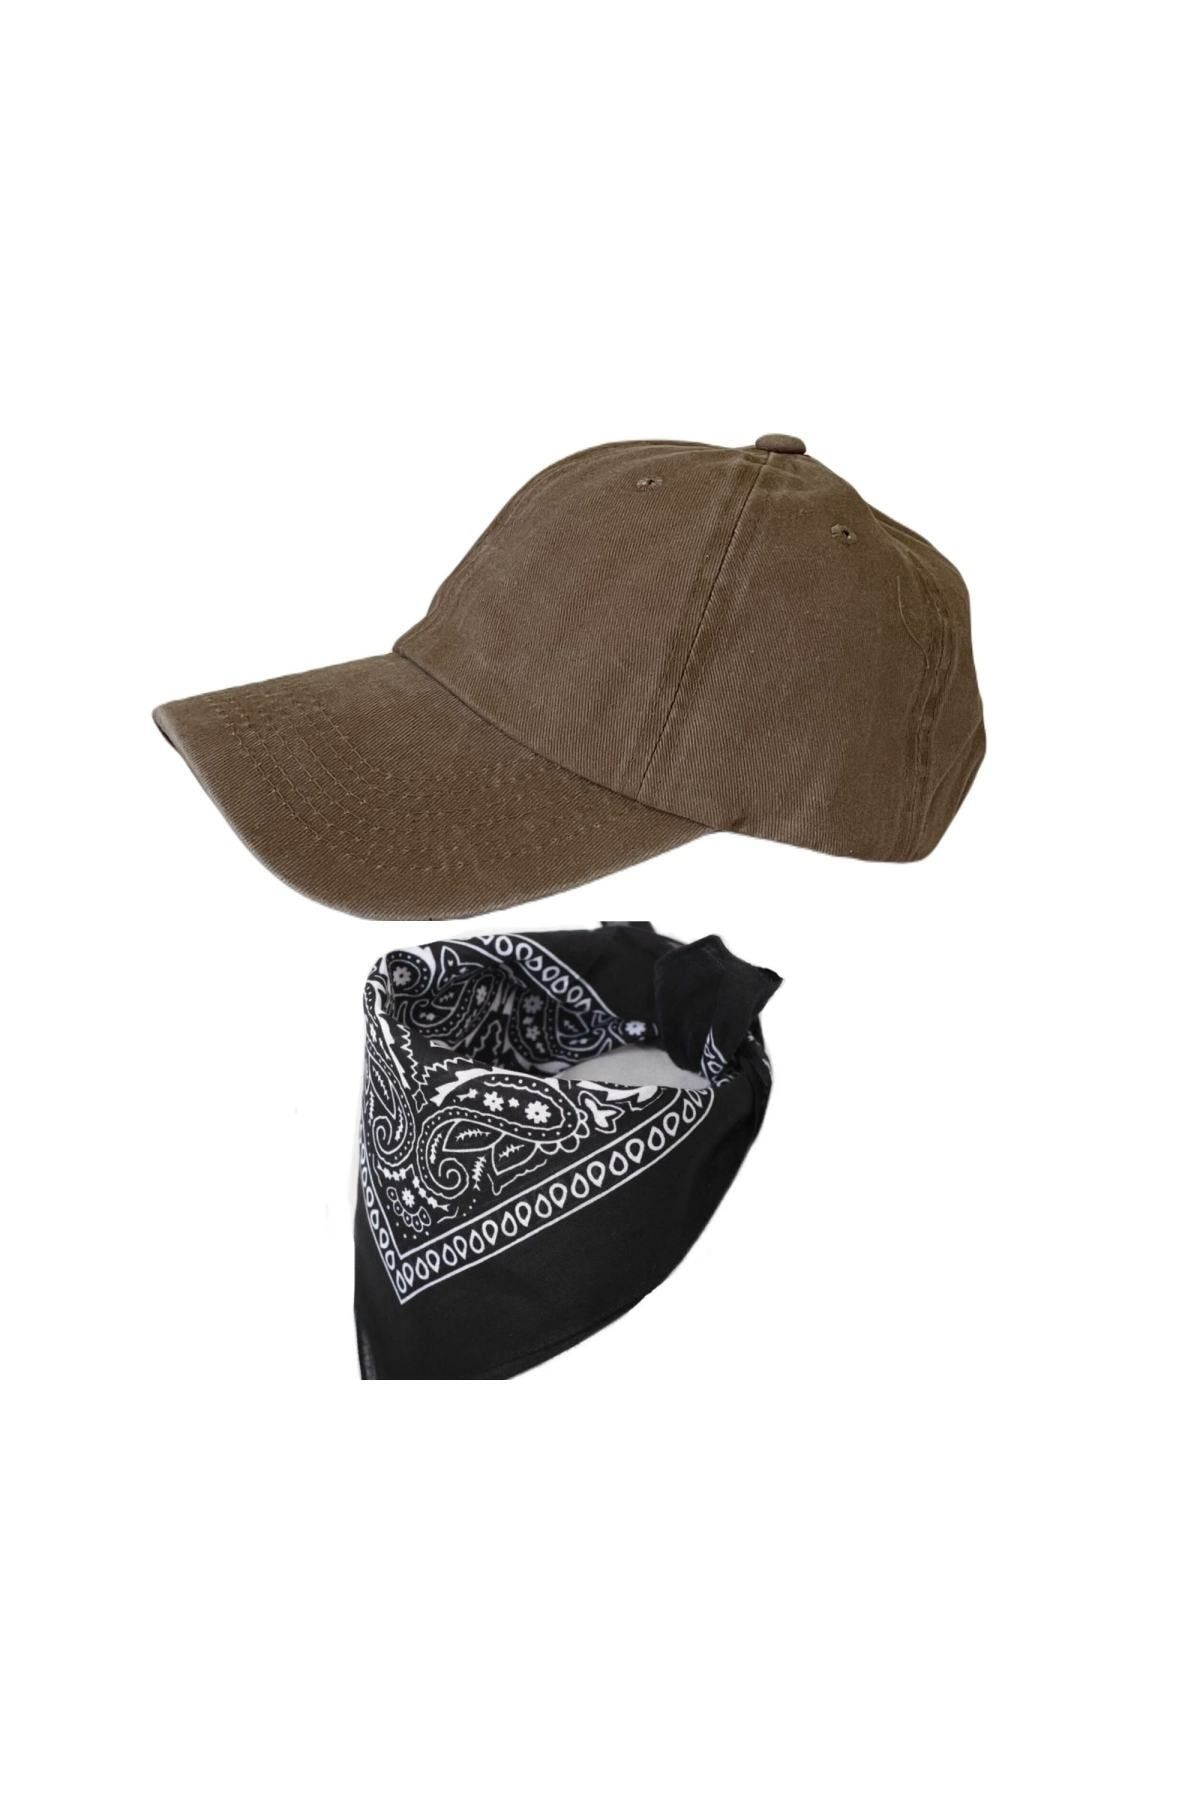 Rupen Kraft Bandana Kombinlidüz Vizon Renk Yıkamalı Eskitme Şapka Vintage Şapka